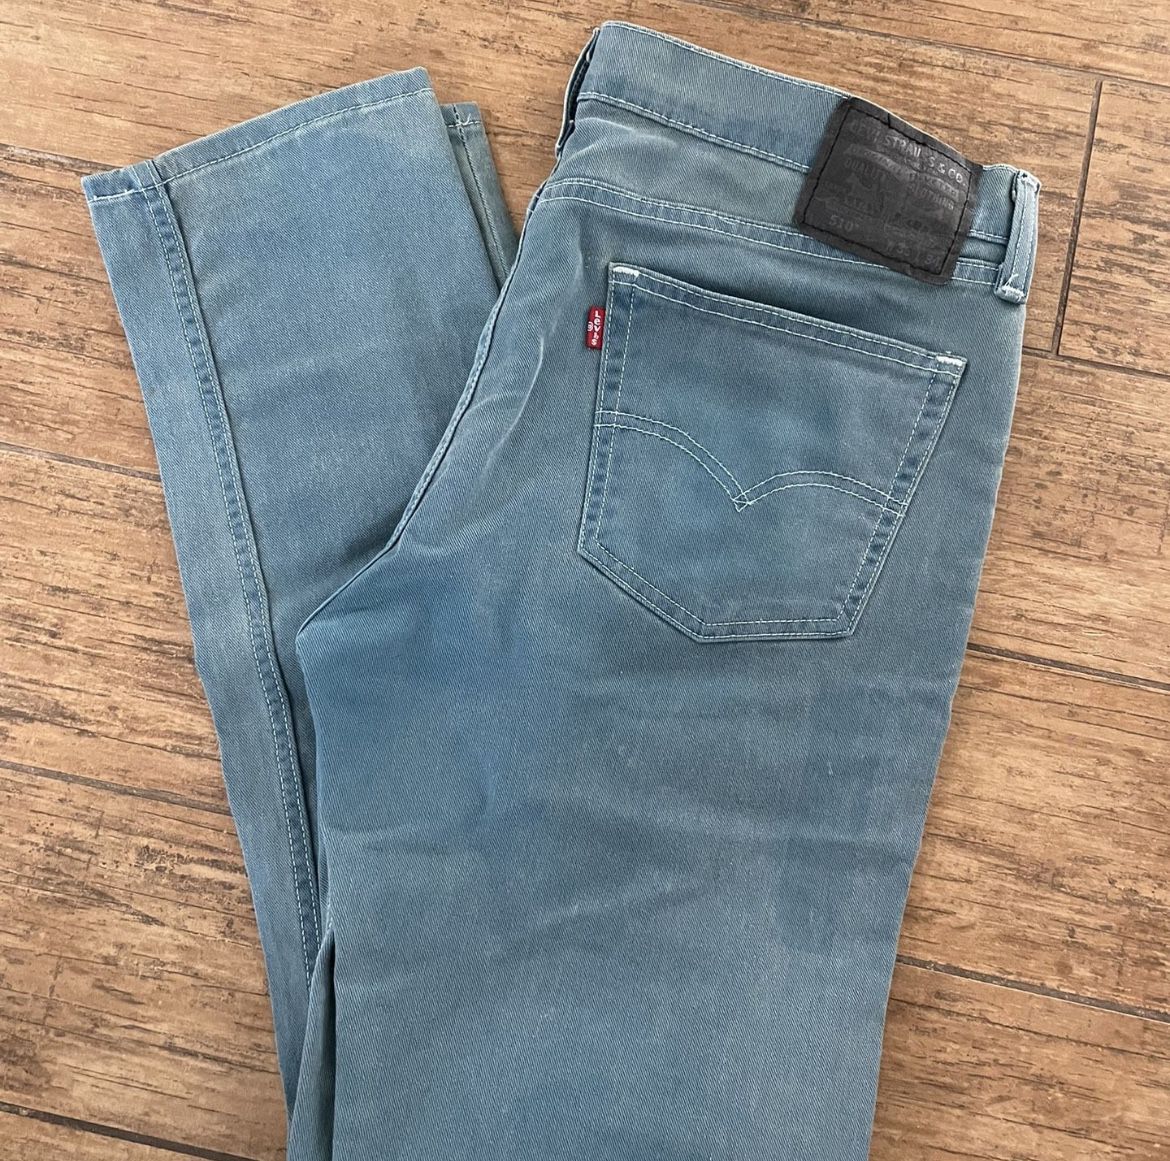 Mens Levis Jeans 36 x 34 for Sale in Glendale, AZ - OfferUp